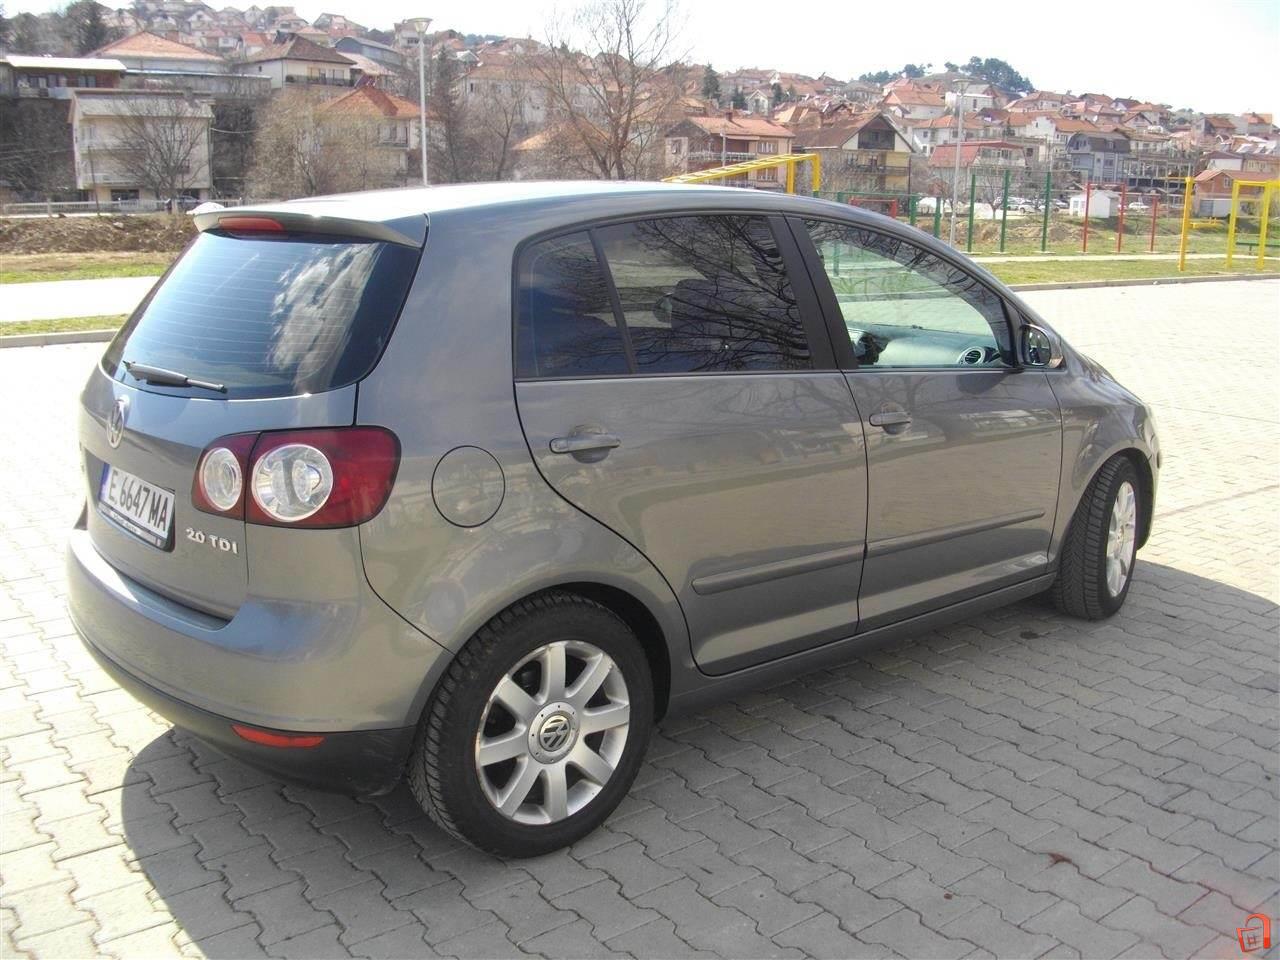 Ad VW GOLF 5 PLUS 2.0 TDI For sale, Delčevo, VEHICLES